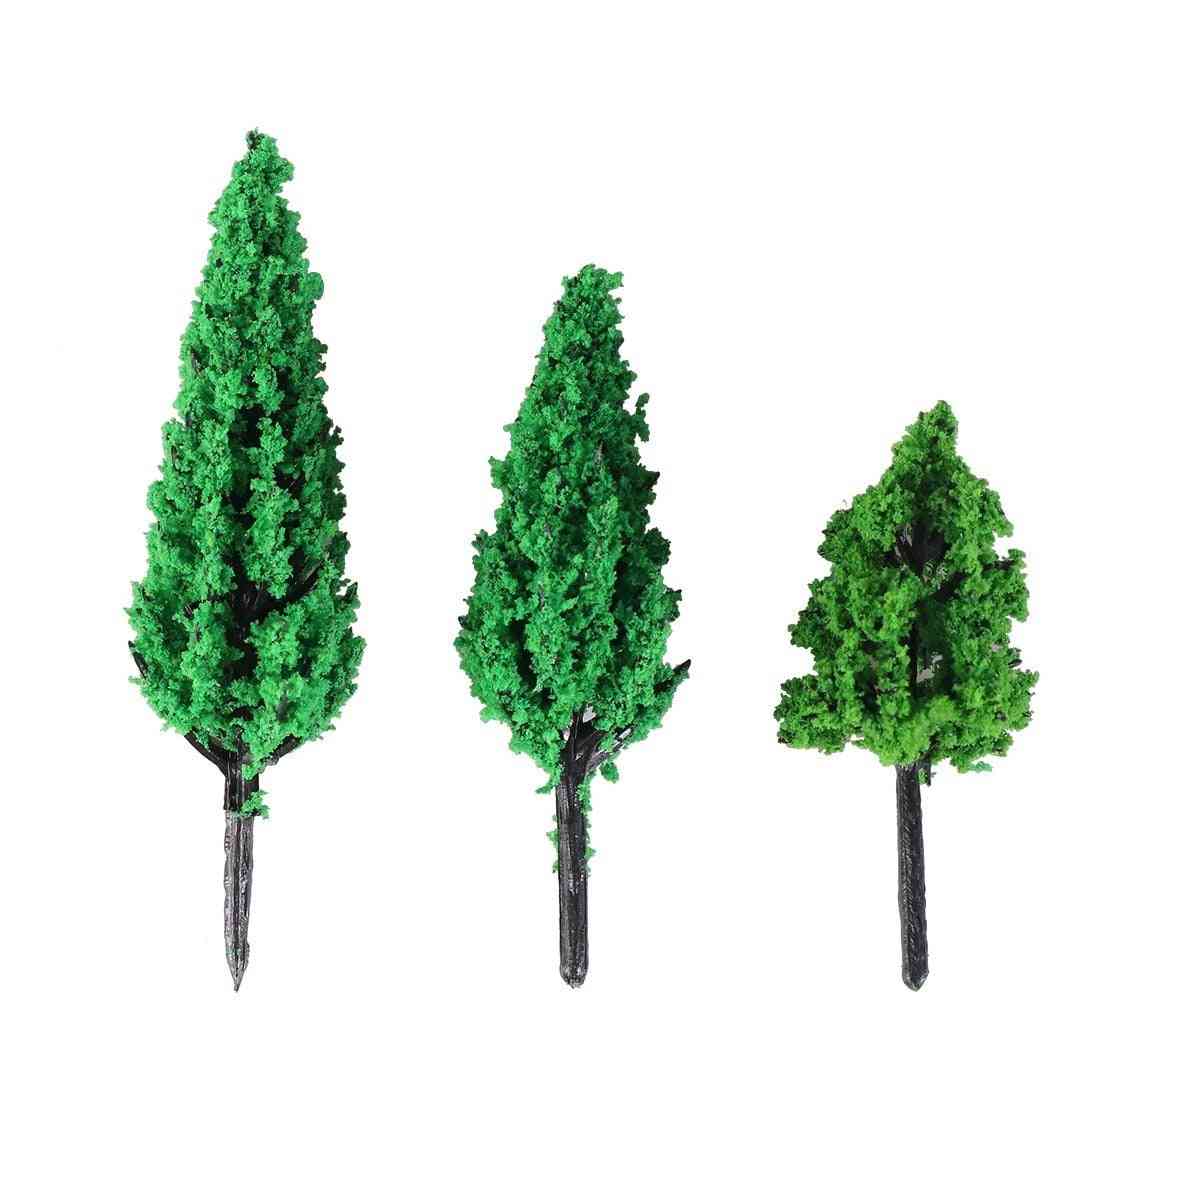 Trær park furu poppel skog pagode miniatyr diorama mikro layout dekorasjon miniatyrer trær -